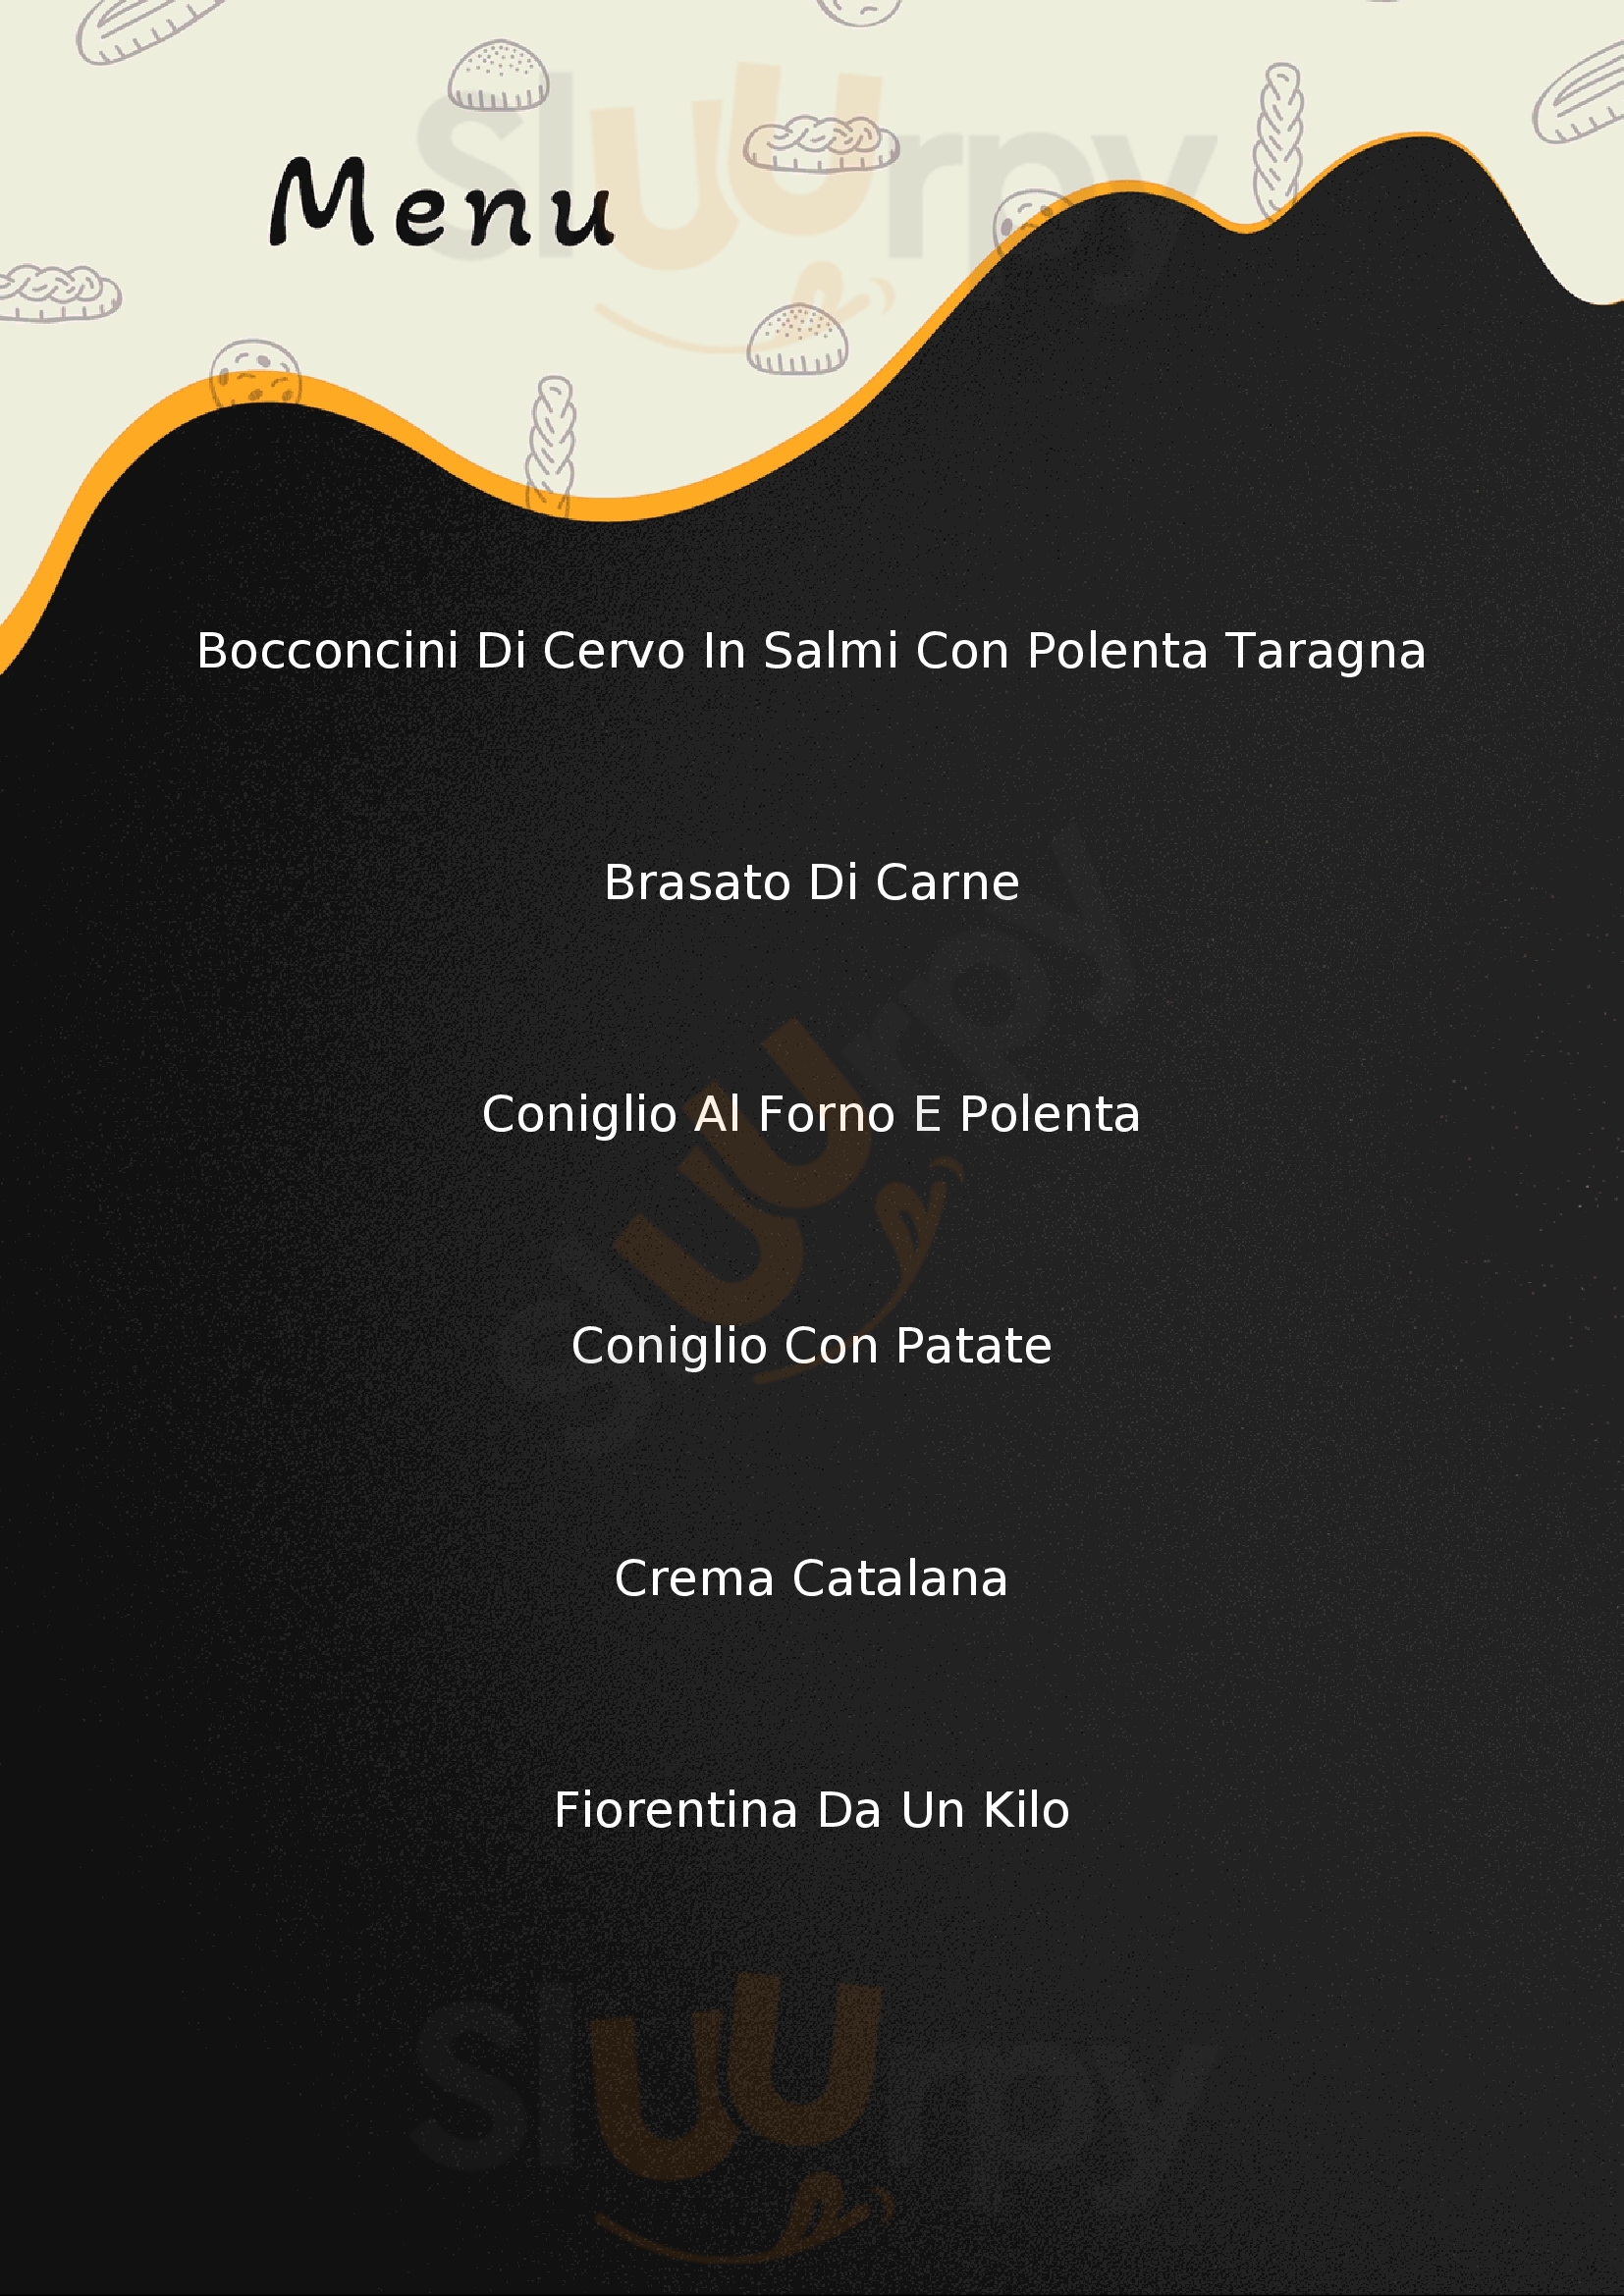 La Scagna Cucina Tipica Bergamo menù 1 pagina